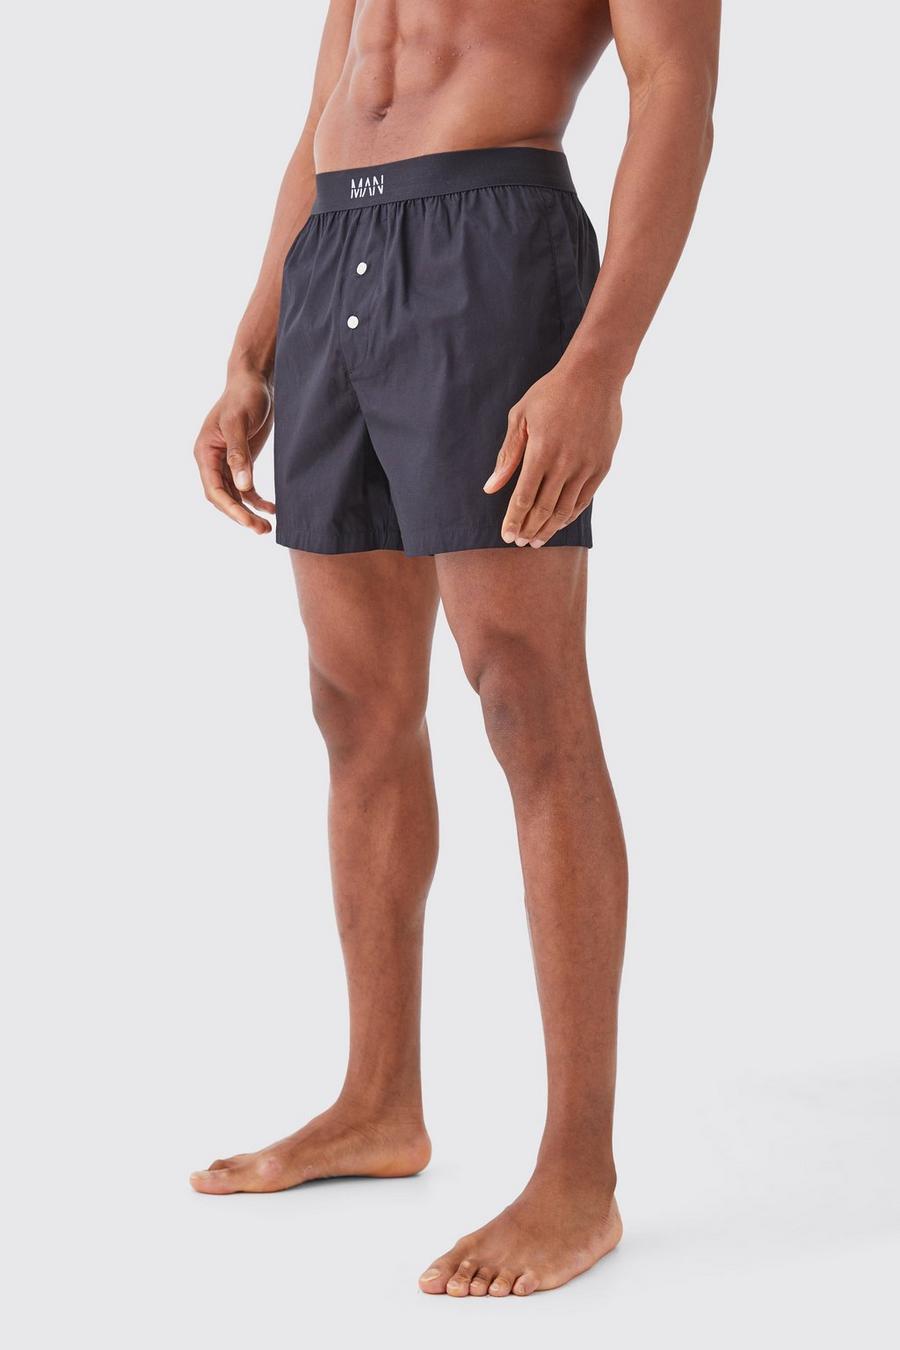 Black Original Man Woven Boxer Shorts